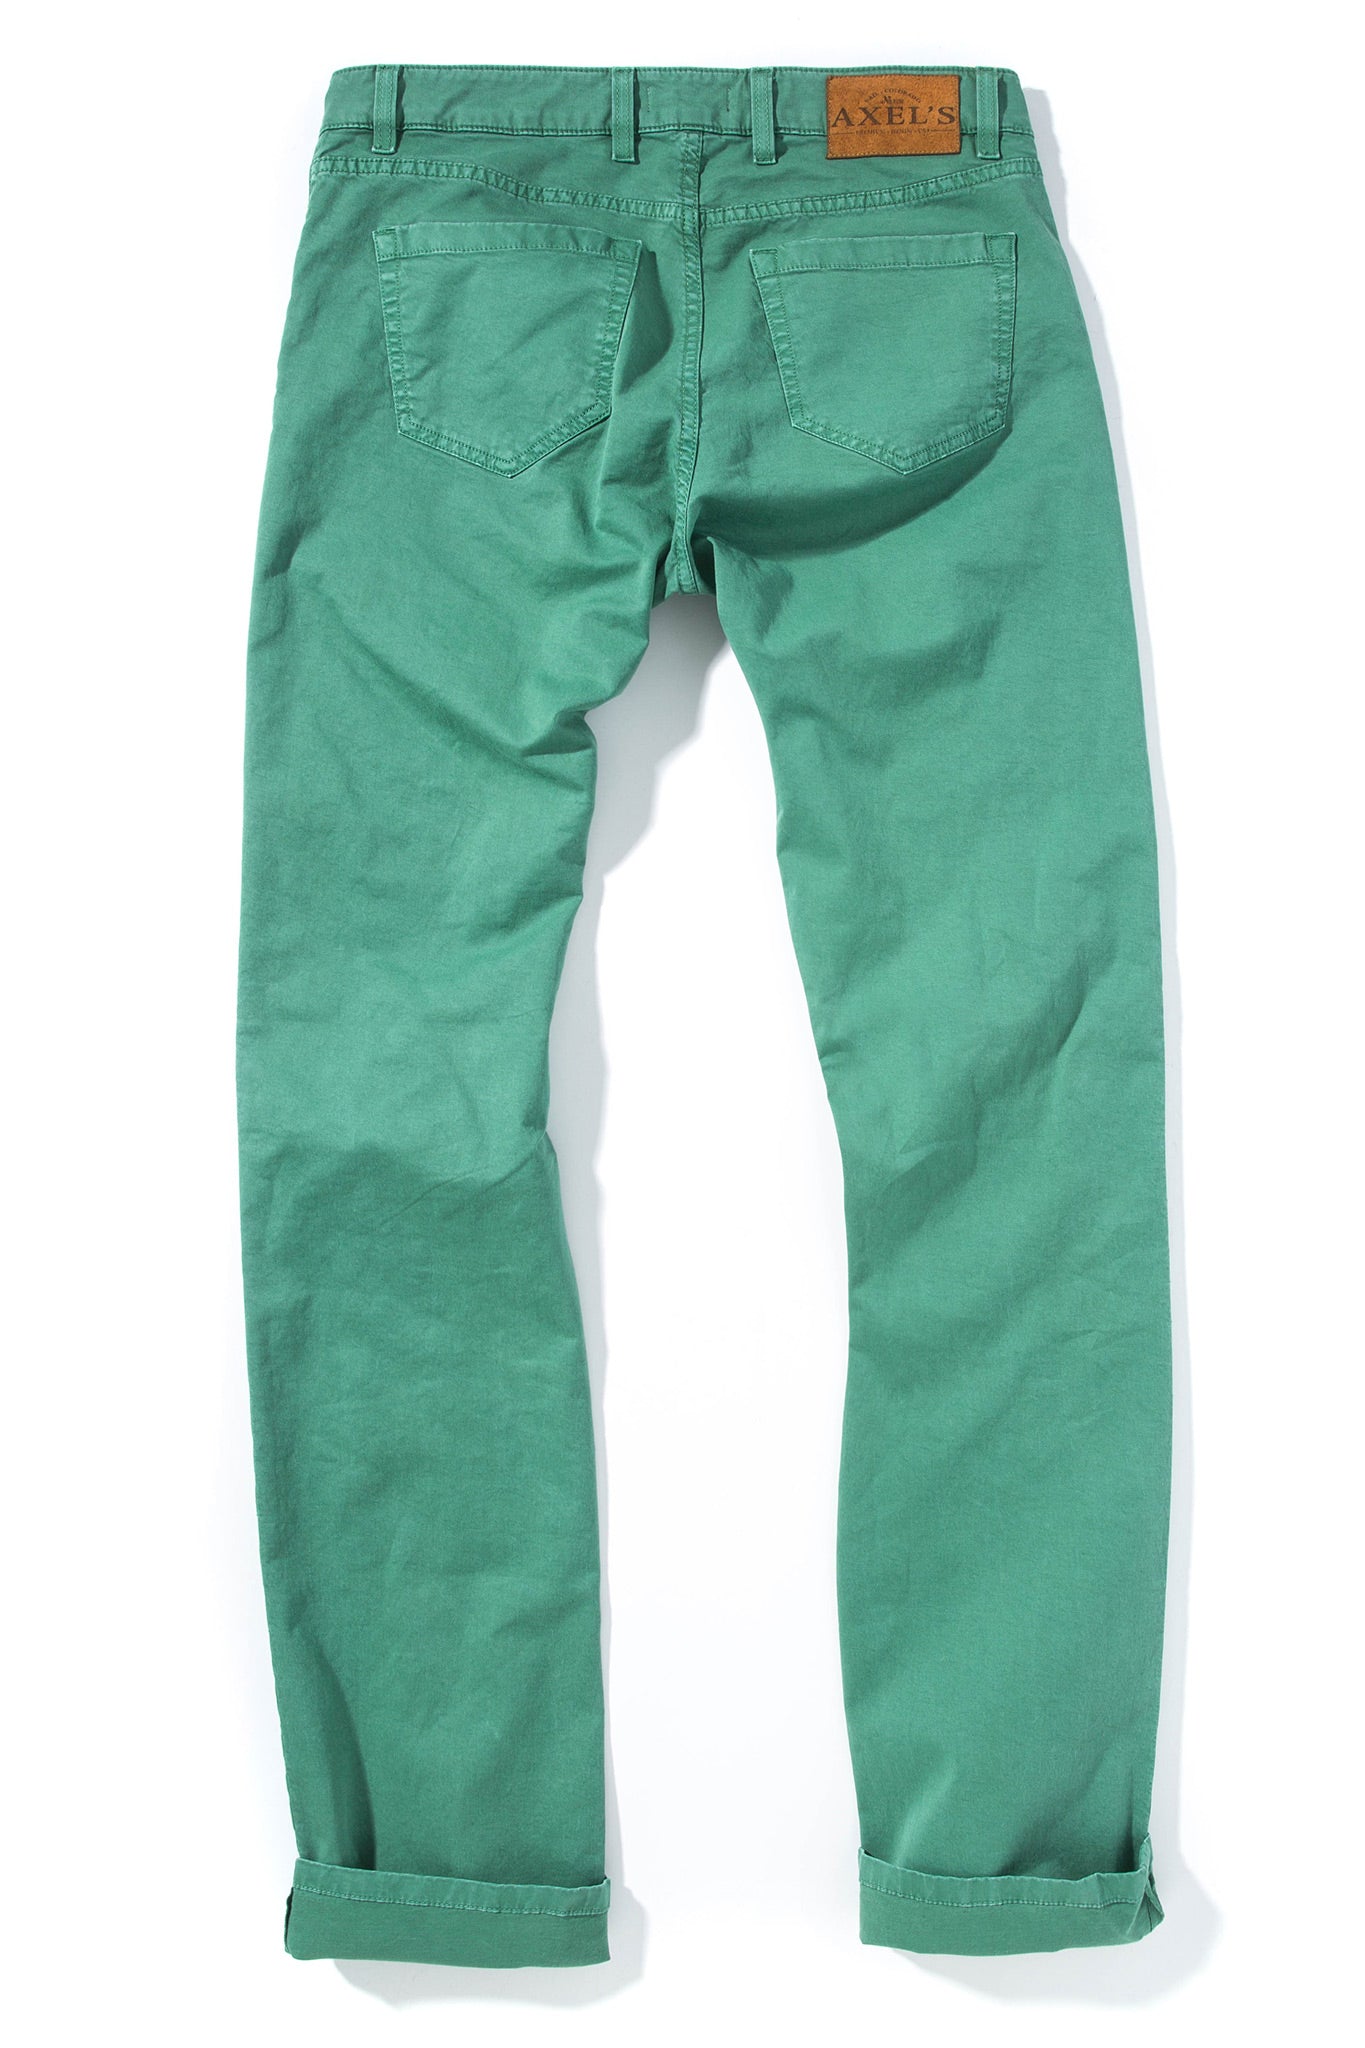 Flagstaff Performance Denim In Verde Giada | Mens - Pants - 5 Pocket | Axels Premium Denim